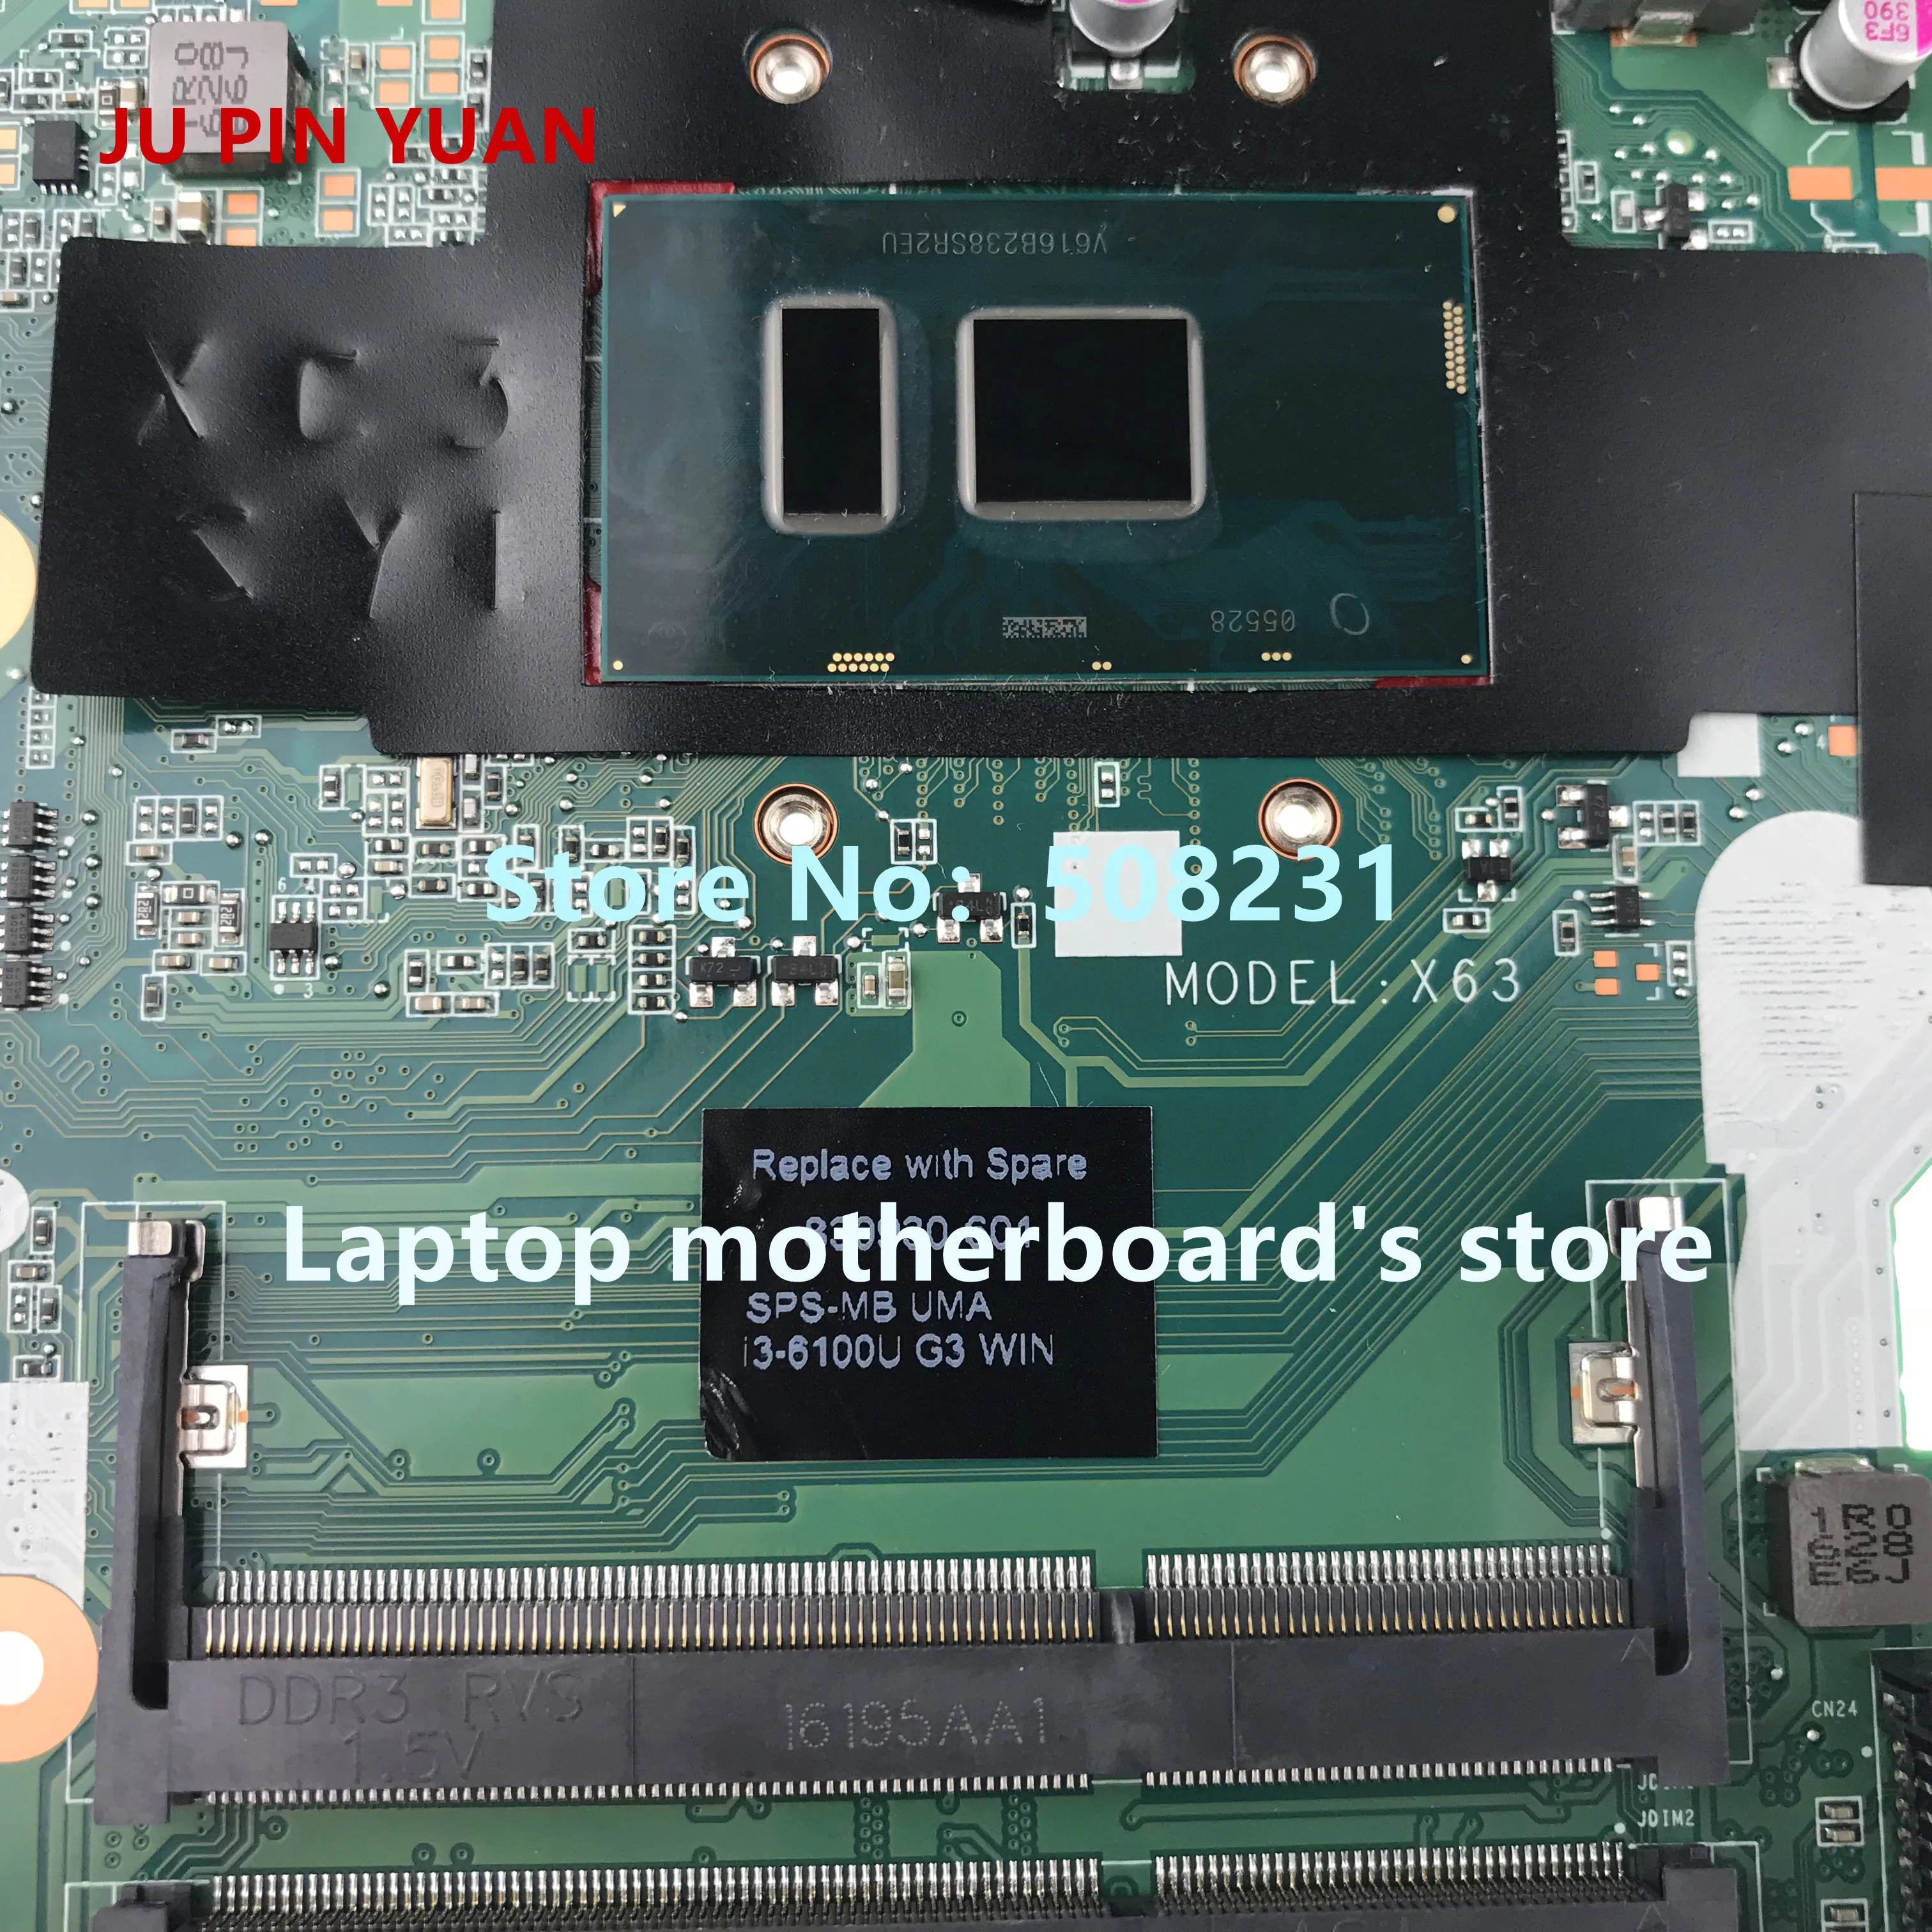 Ju pin yuan для ноутбука hp ProBook 430 G5 L01036-001 L01036-601 DA0X8BMB6F0 материнская плата для ноутбука I3-6006U полностью протестирована